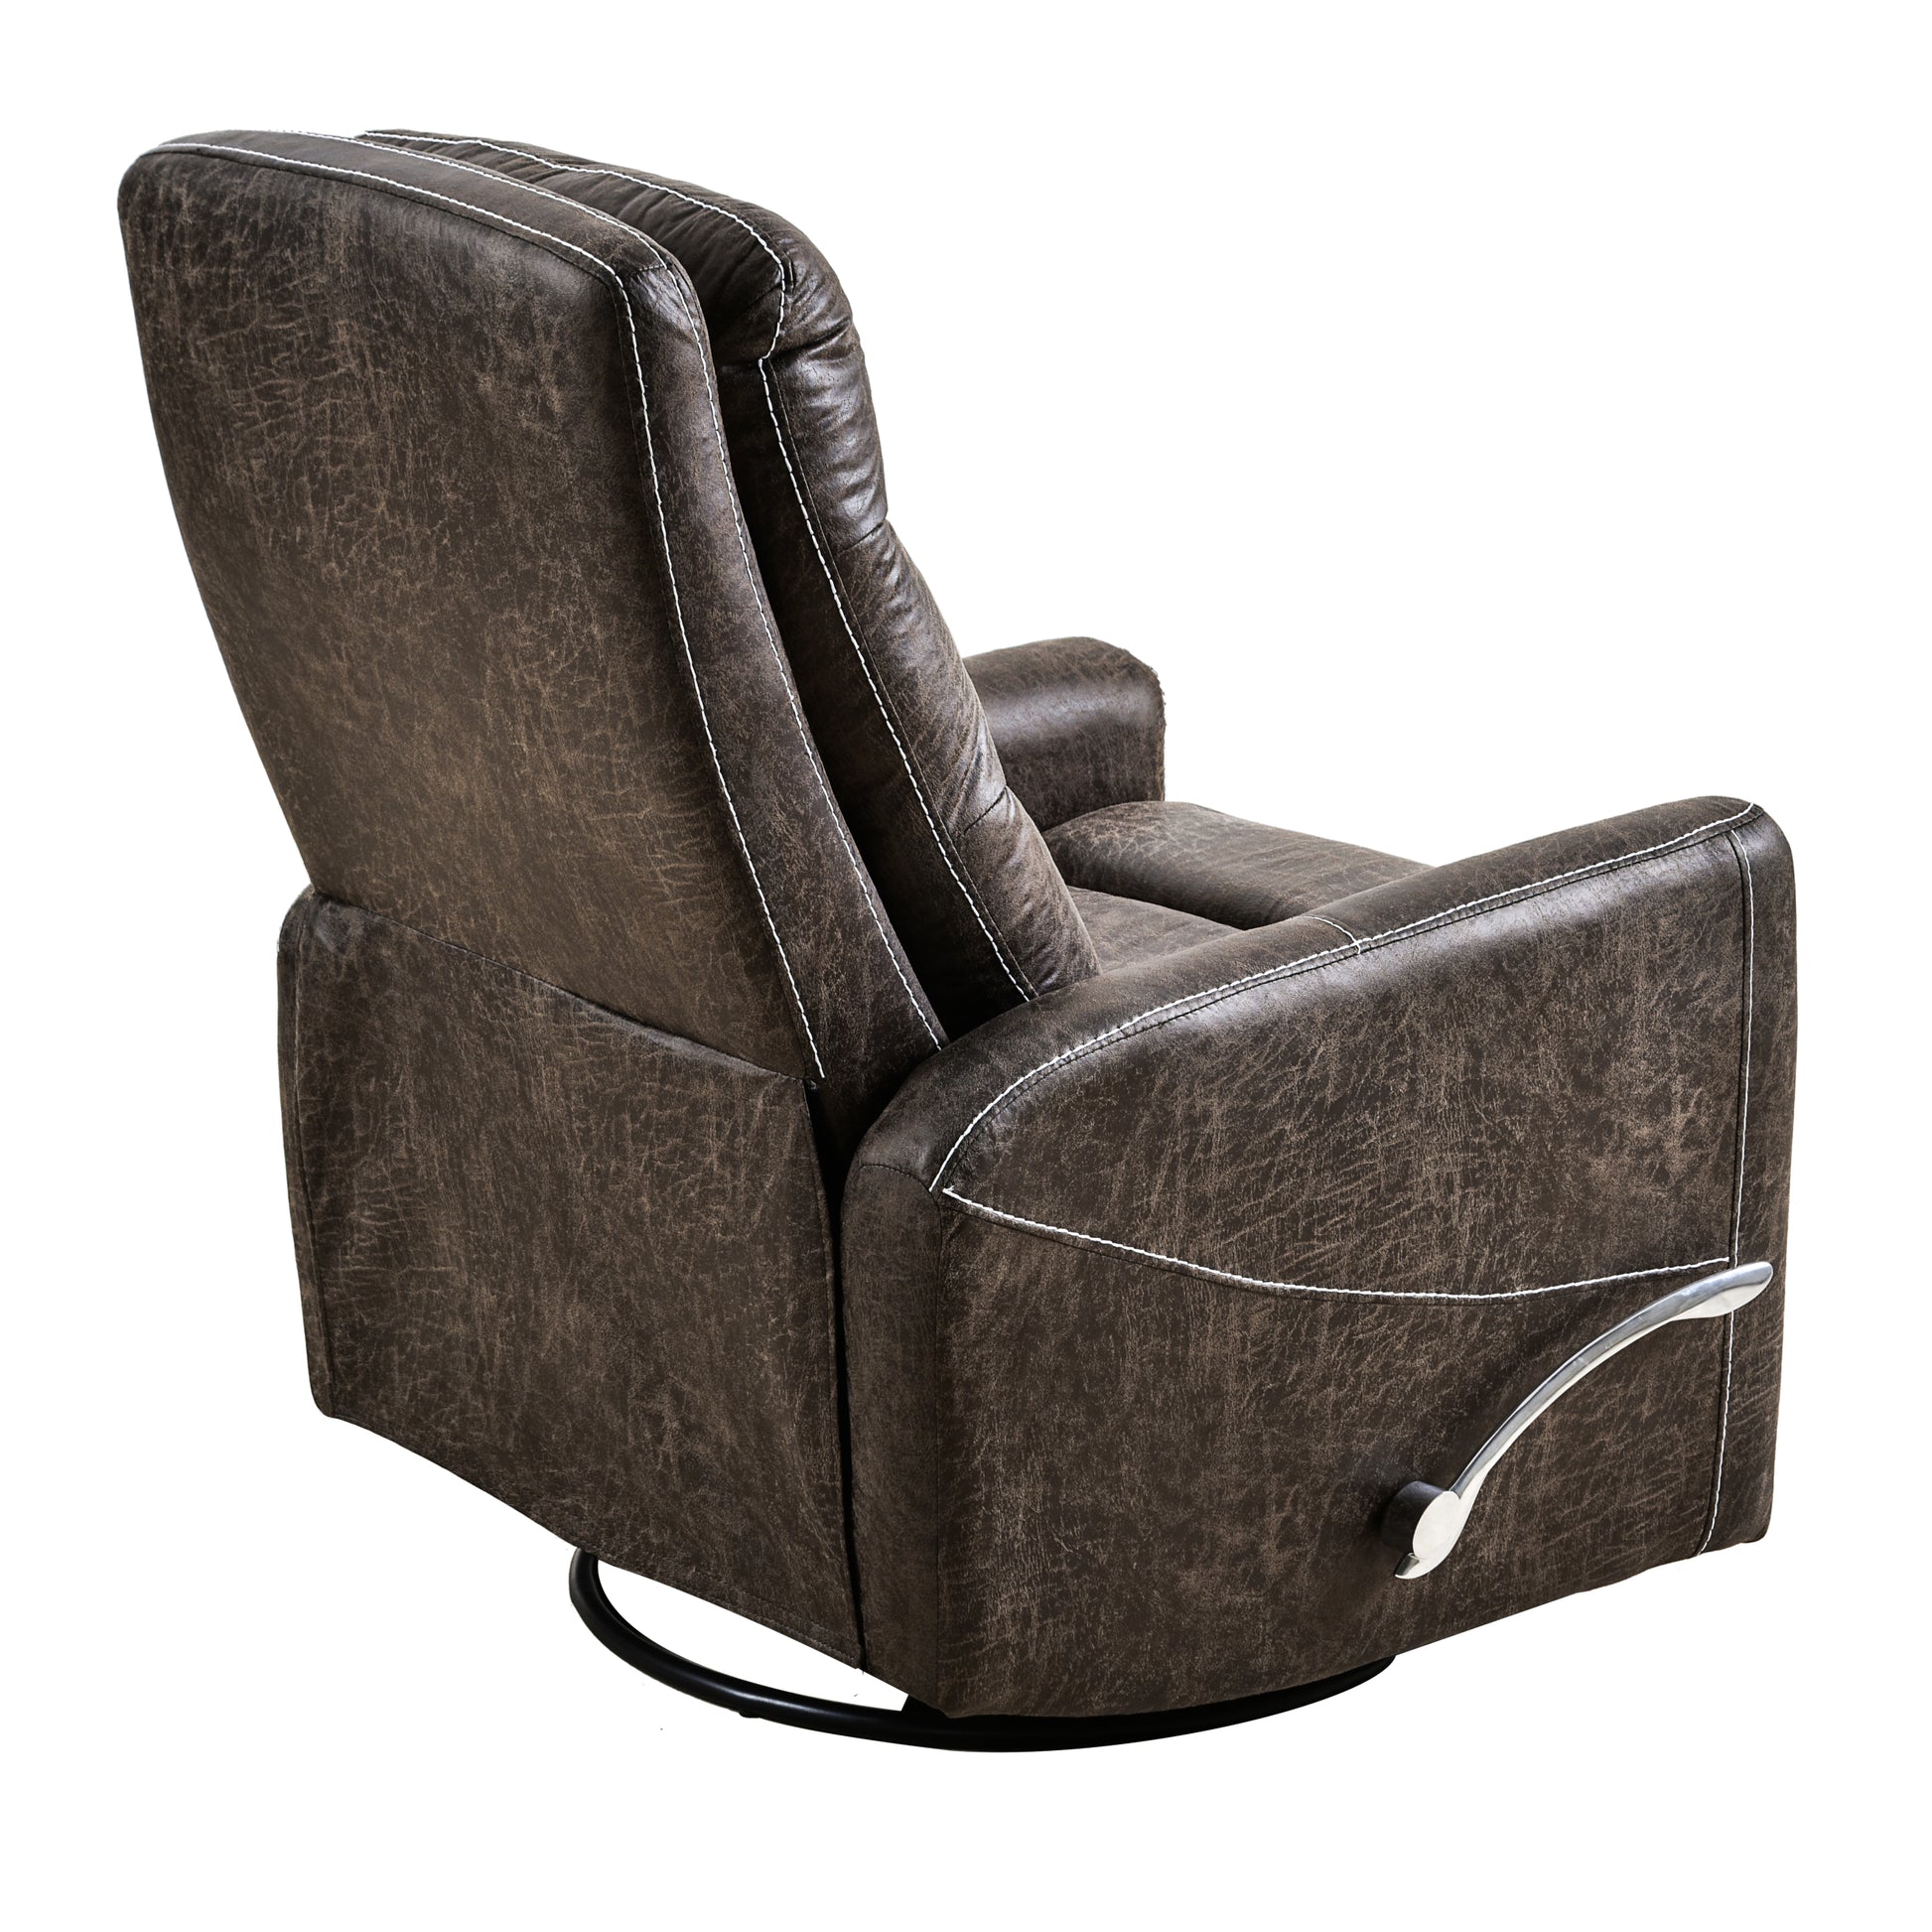 Swivel Glider Rocker Recliner Chair For